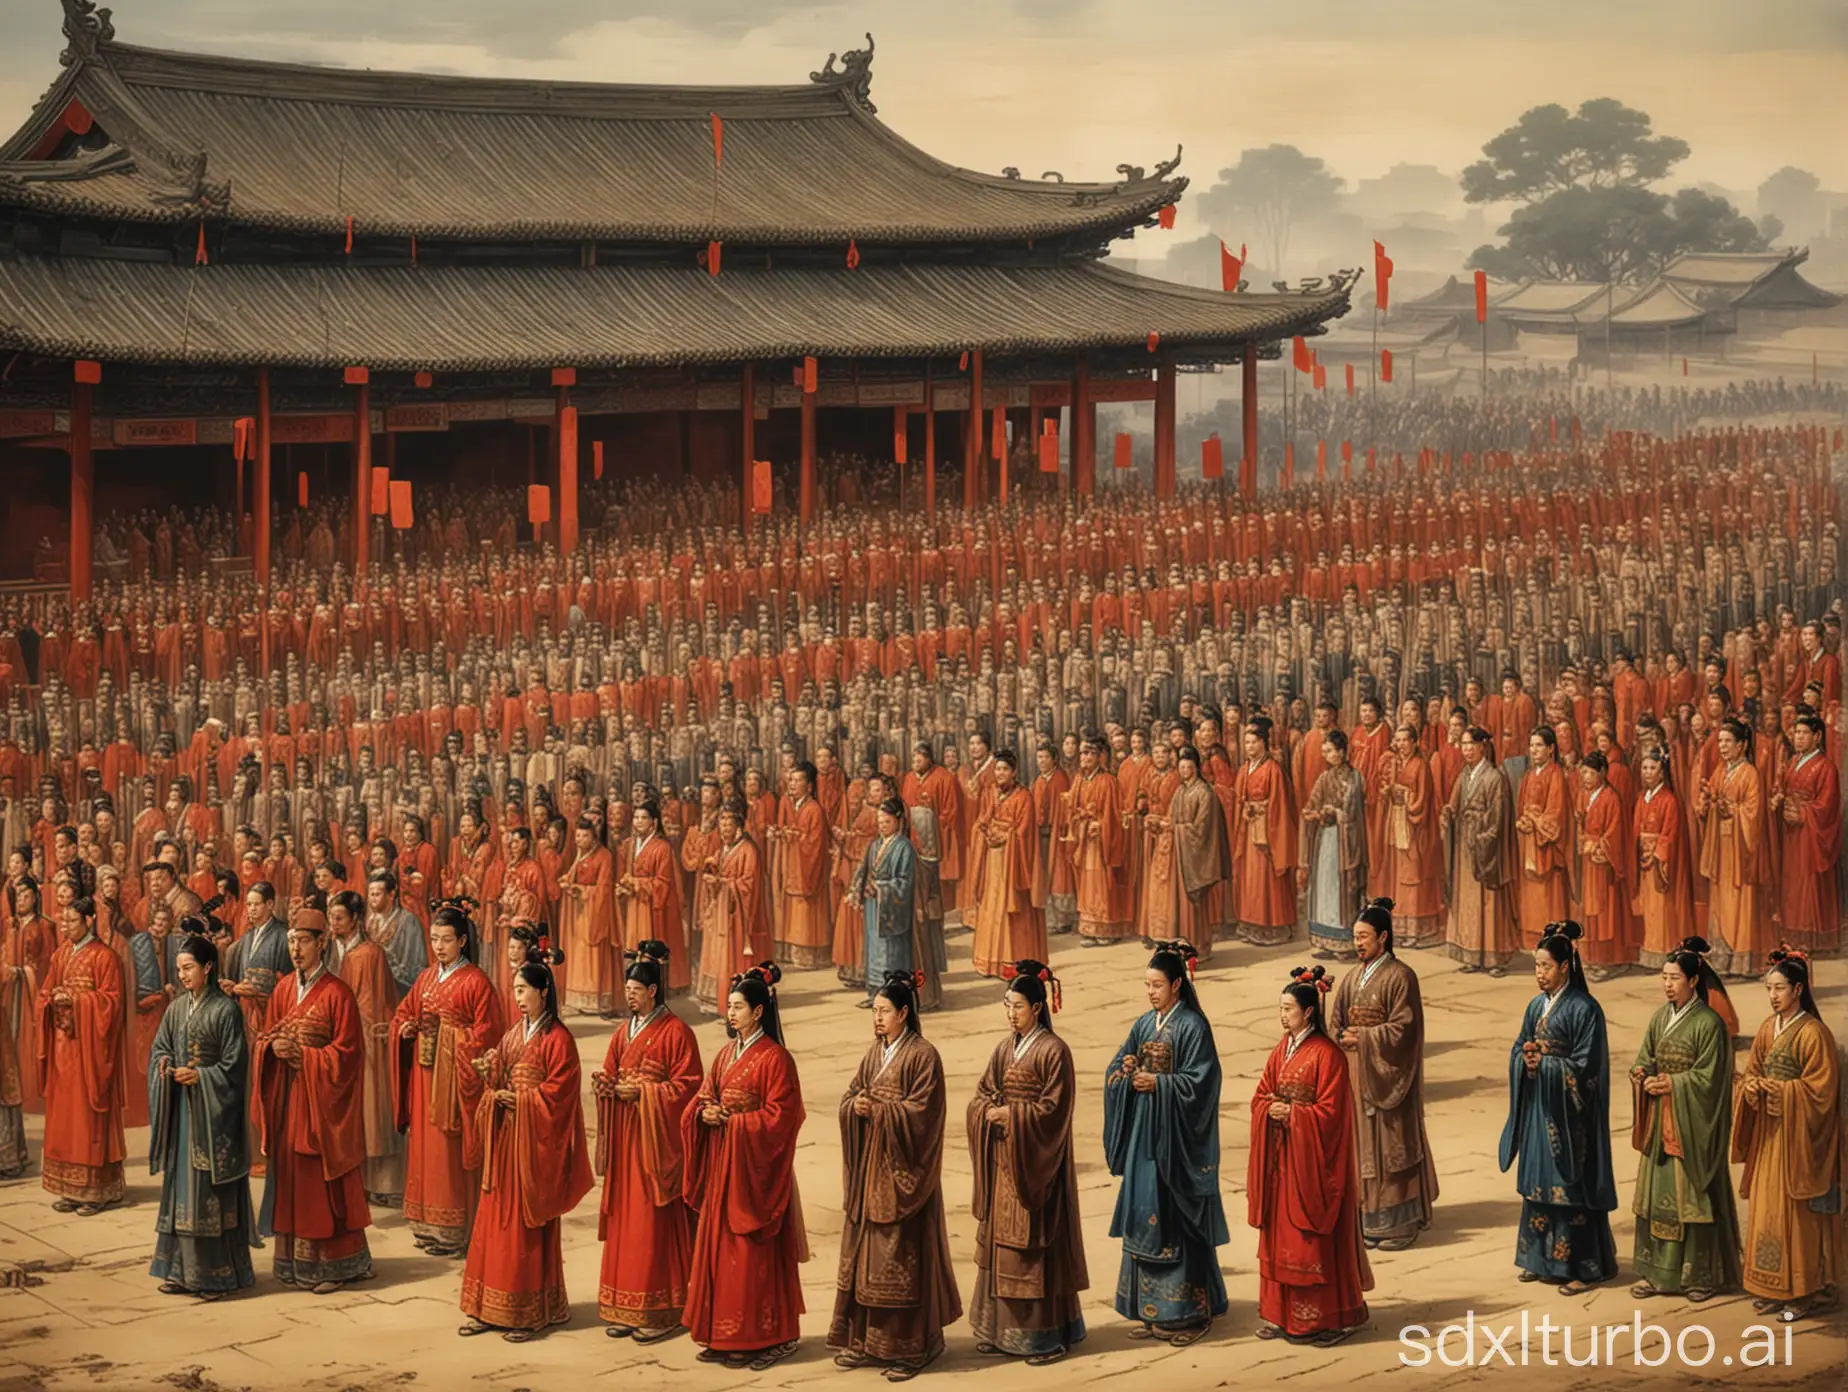 China Qin Dynasty's wedding